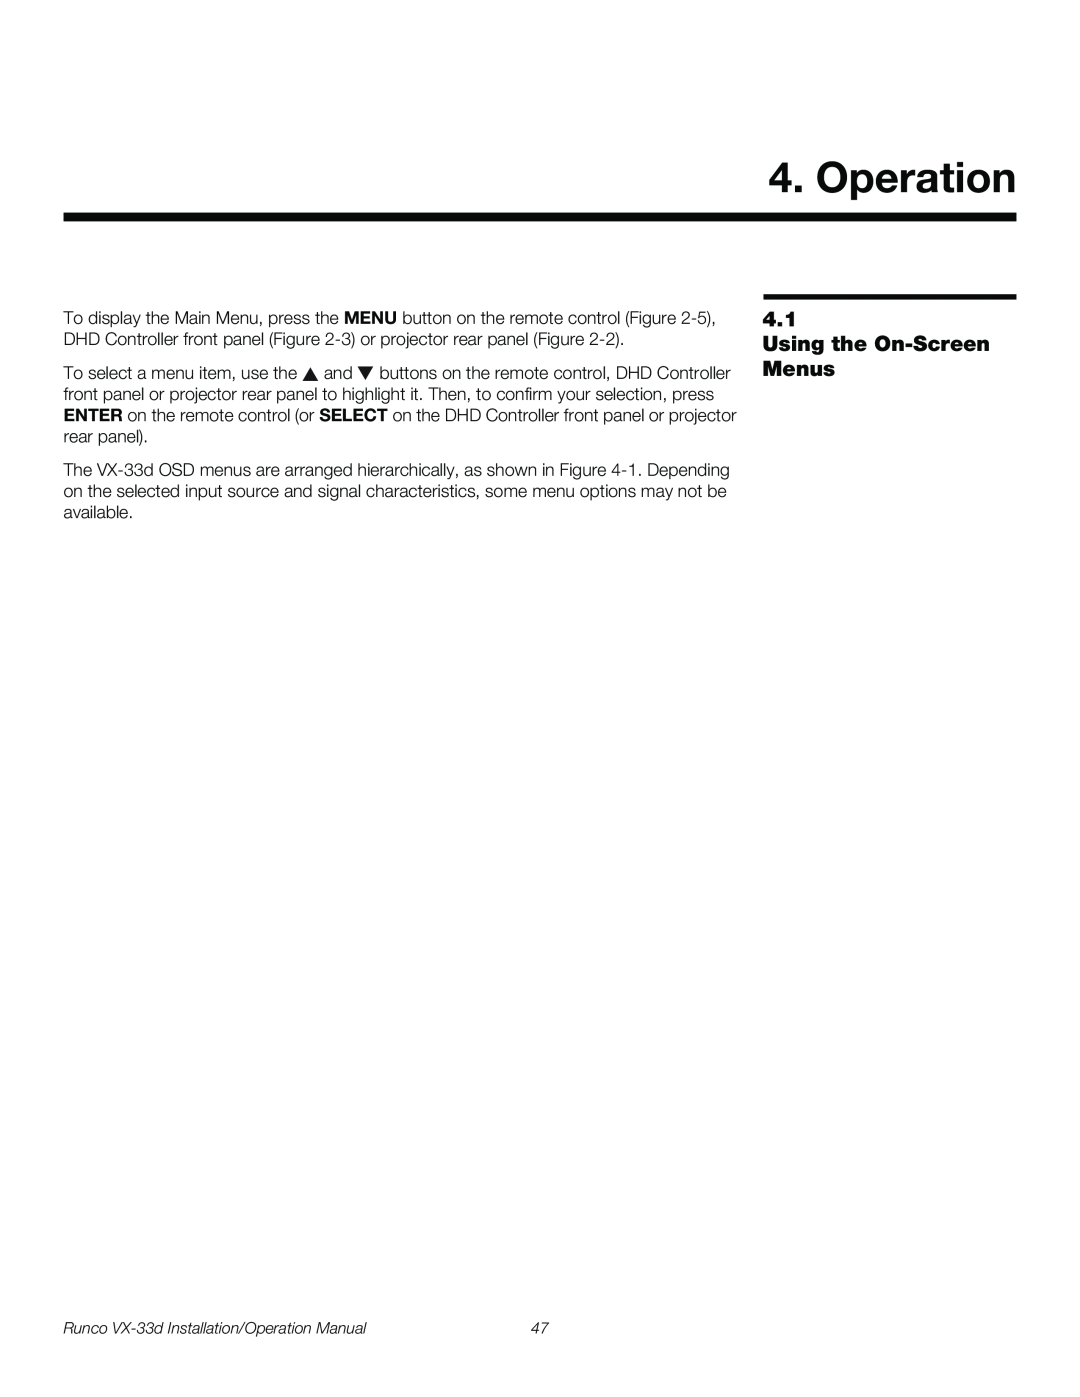 Runco VX-33D operation manual Operation, Using the On-Screen Menus 